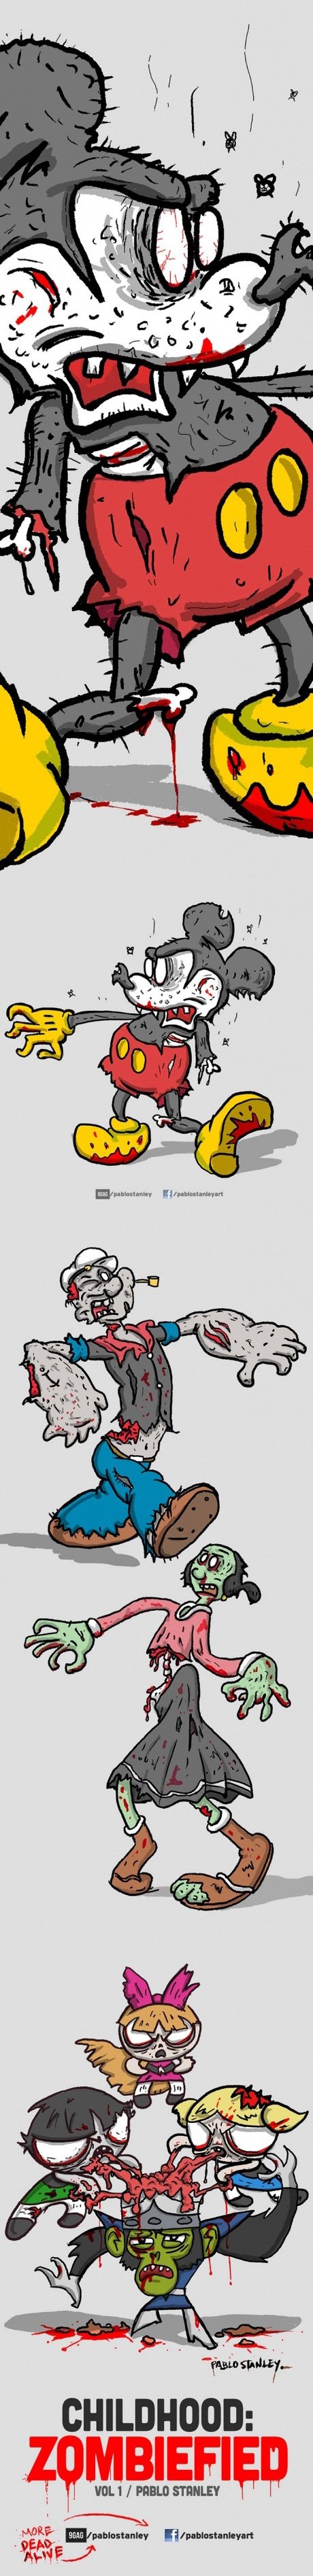 Zombie Cartoons